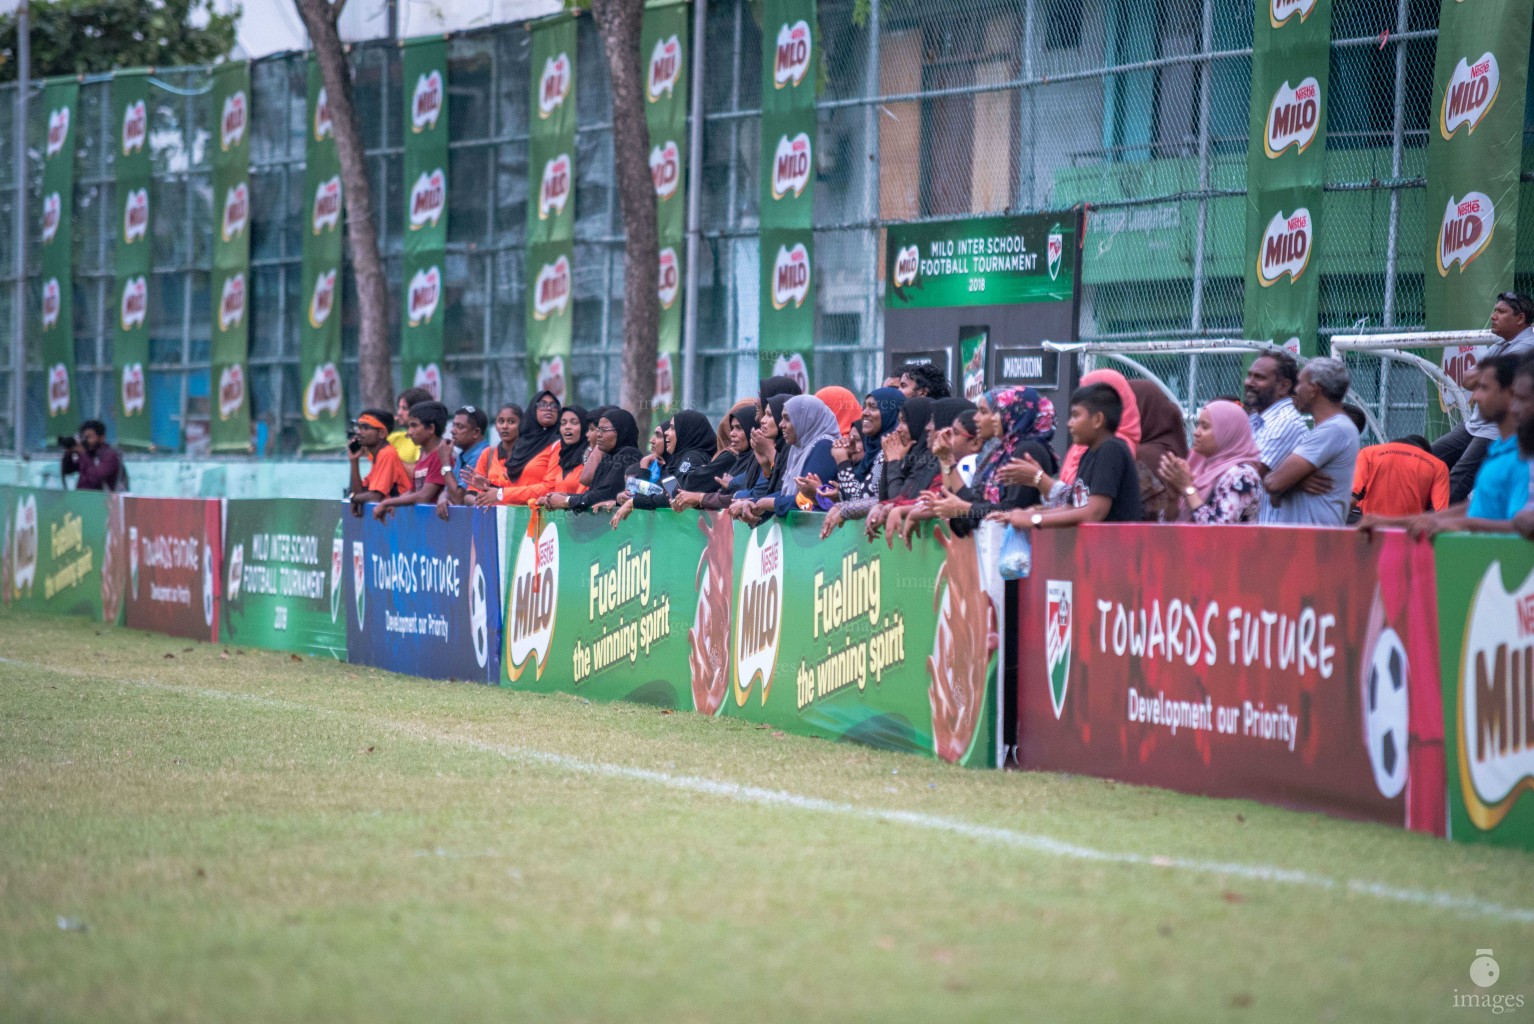 Milo Inter-school Football Tournament- Under 14 Ghaazee School vs Imaduddin School In Henveiru Stadium at 1630. Monday 12th March 2018 in Male' Maldives. Images.mv Photo/ Abdulla Abeedh